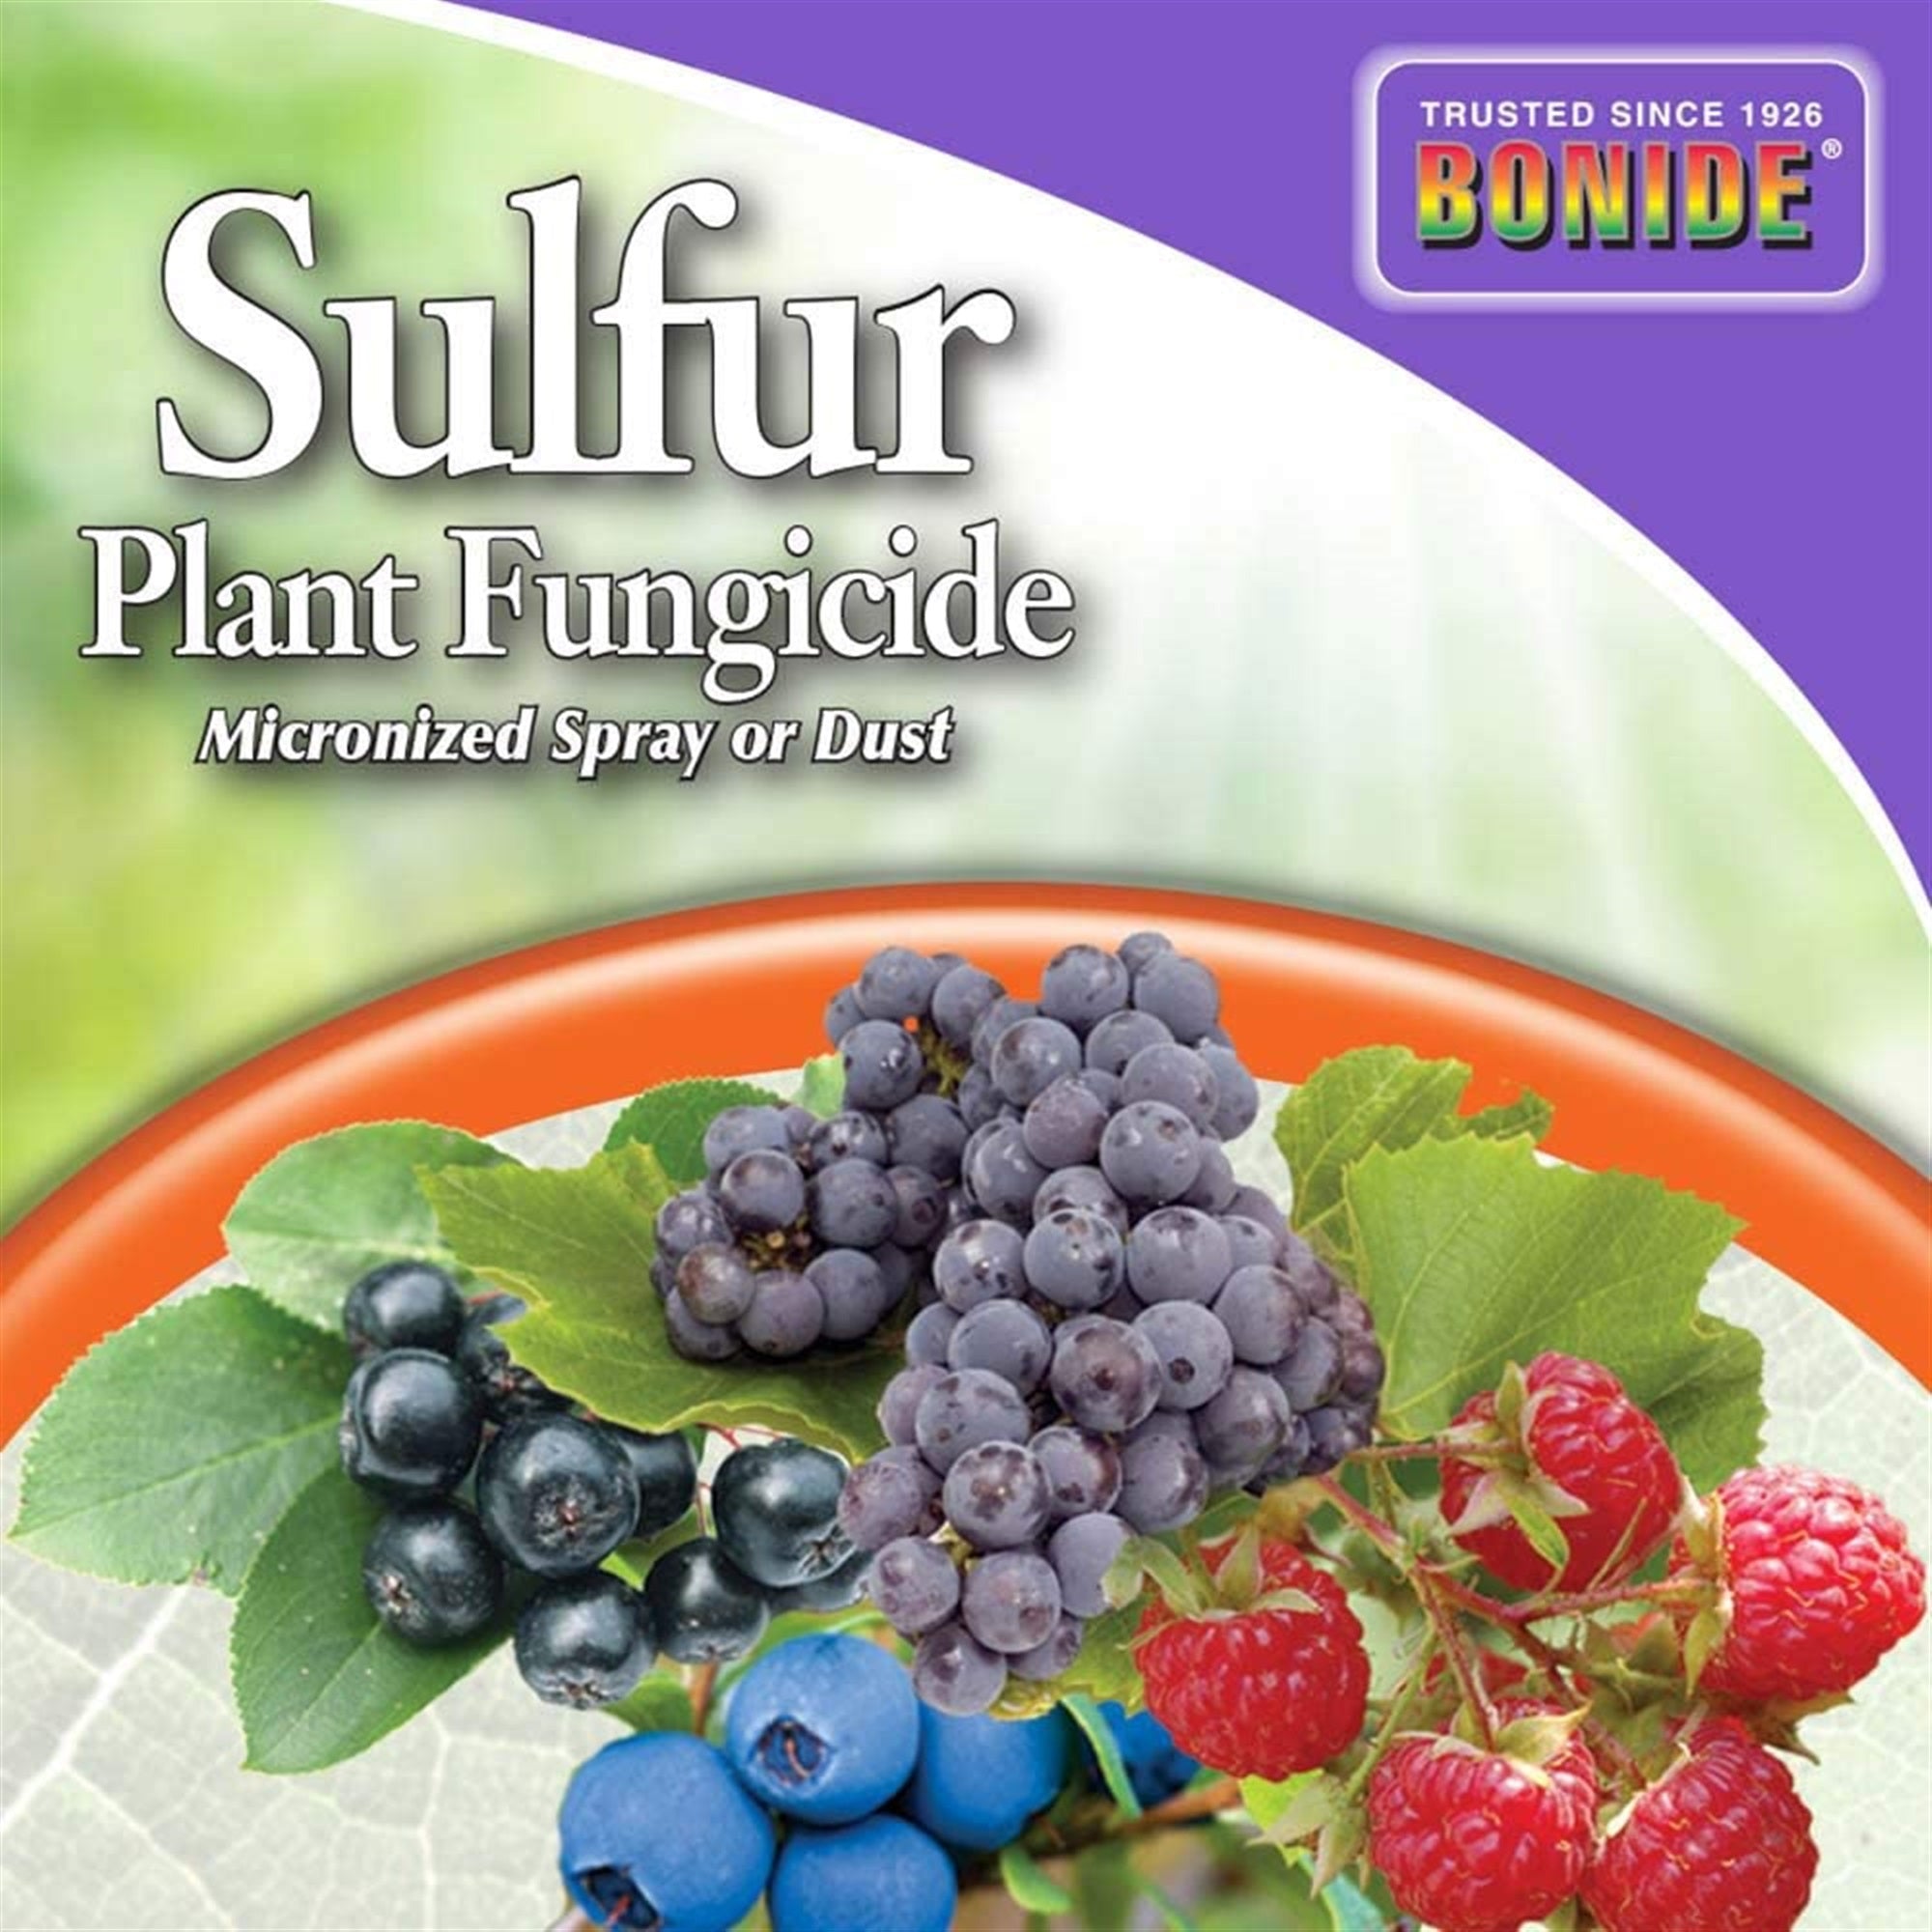 Bonide Sulfur Plant Fungicide Organically Controls Rust Leaf Spot and Powdery Mildew (4 lb.)